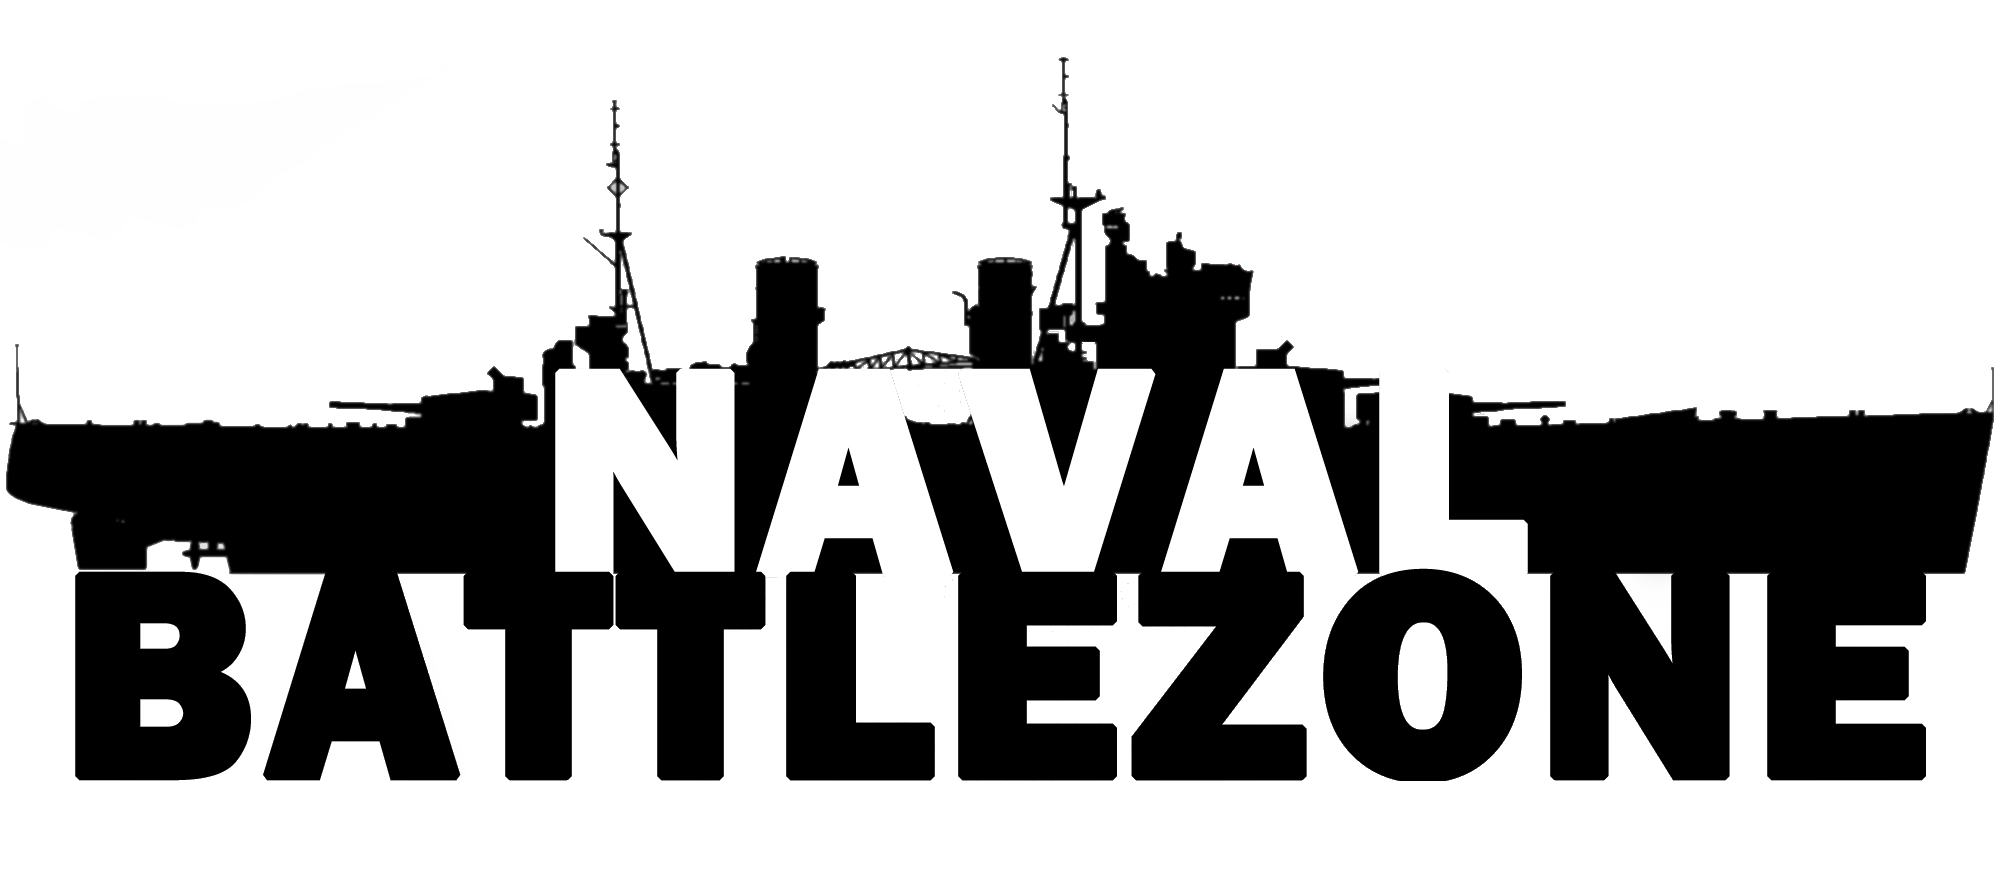 Naval Logo - Naval Battlezone - WWII Naval Warfare